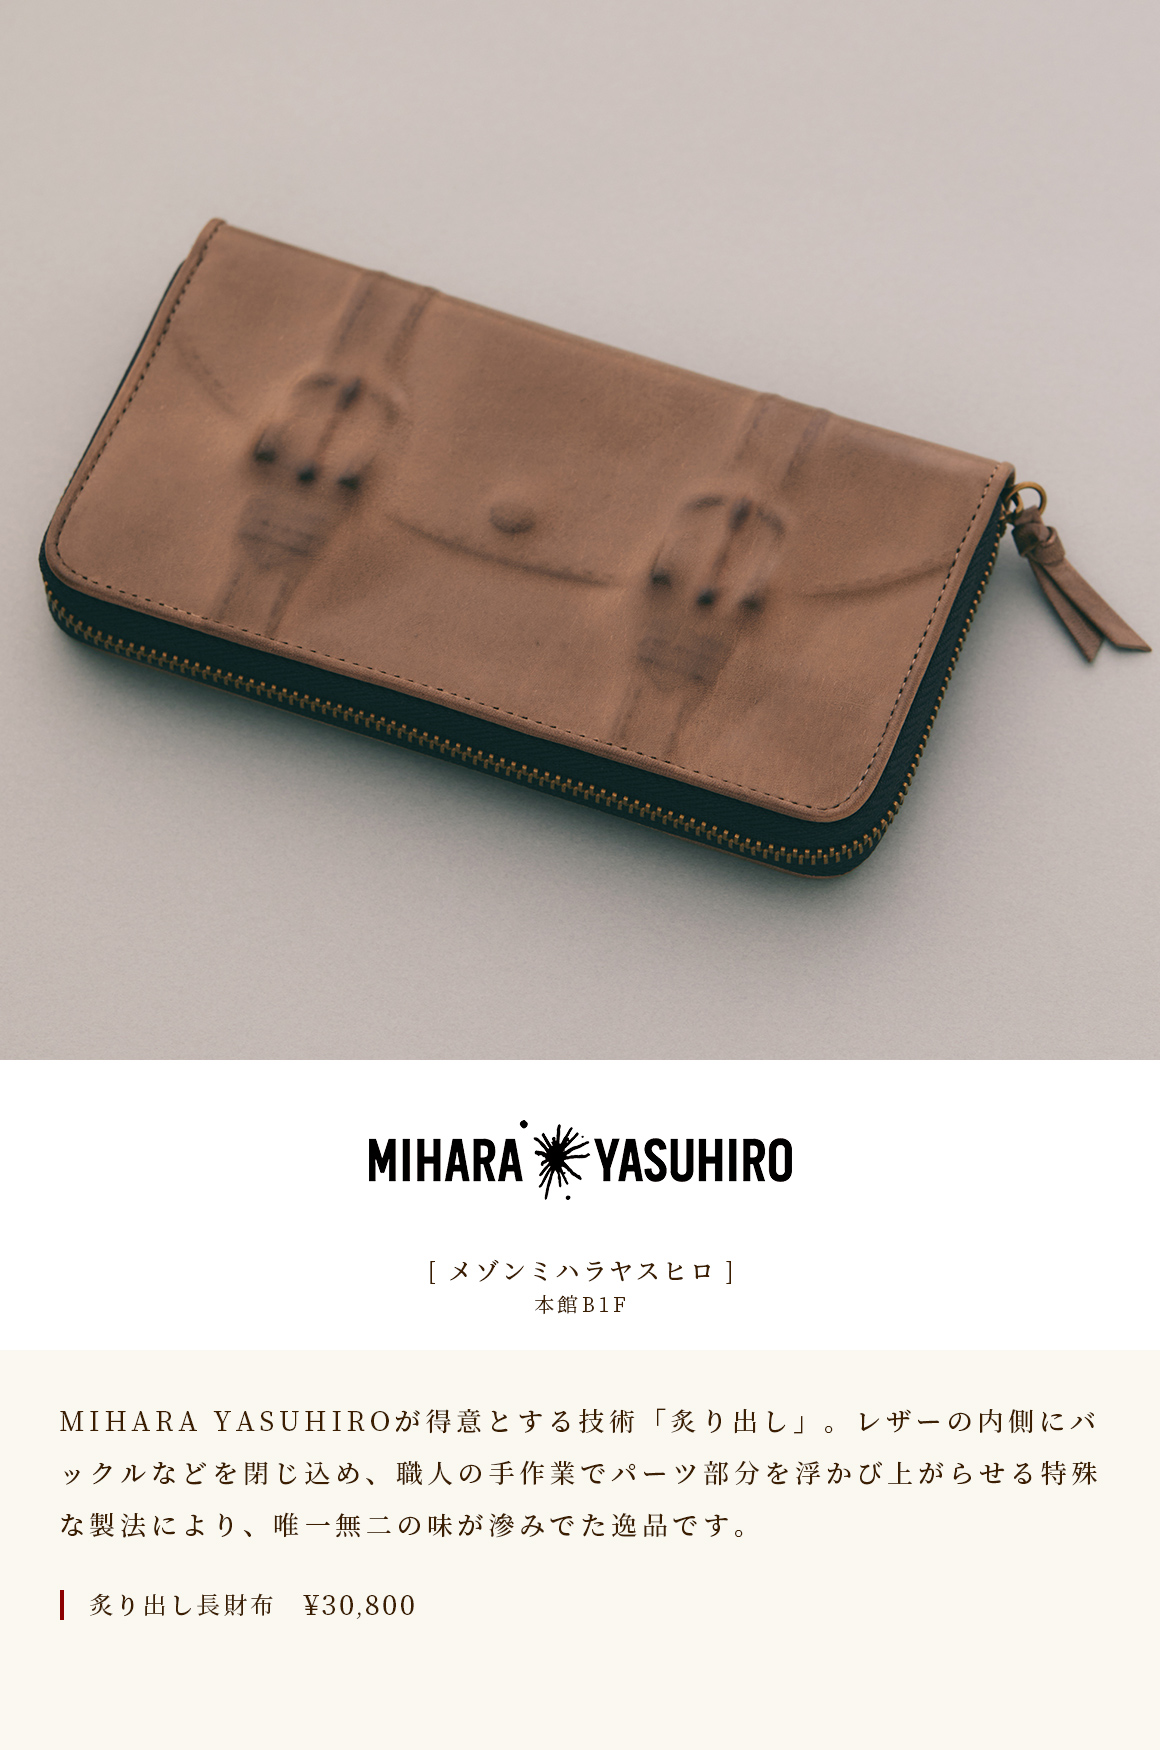 [Maison Mihara Yasuhiro] Main Building B1F MIHARA YASUHIRO的特色是“Aburidashi”。采用特殊的制造方法，将搭扣封闭在皮革内部，并由工匠手工制作，使零件脱颖而出，是具有独特品味的宝石。 Abridashi 钱包 ￥ 30,800